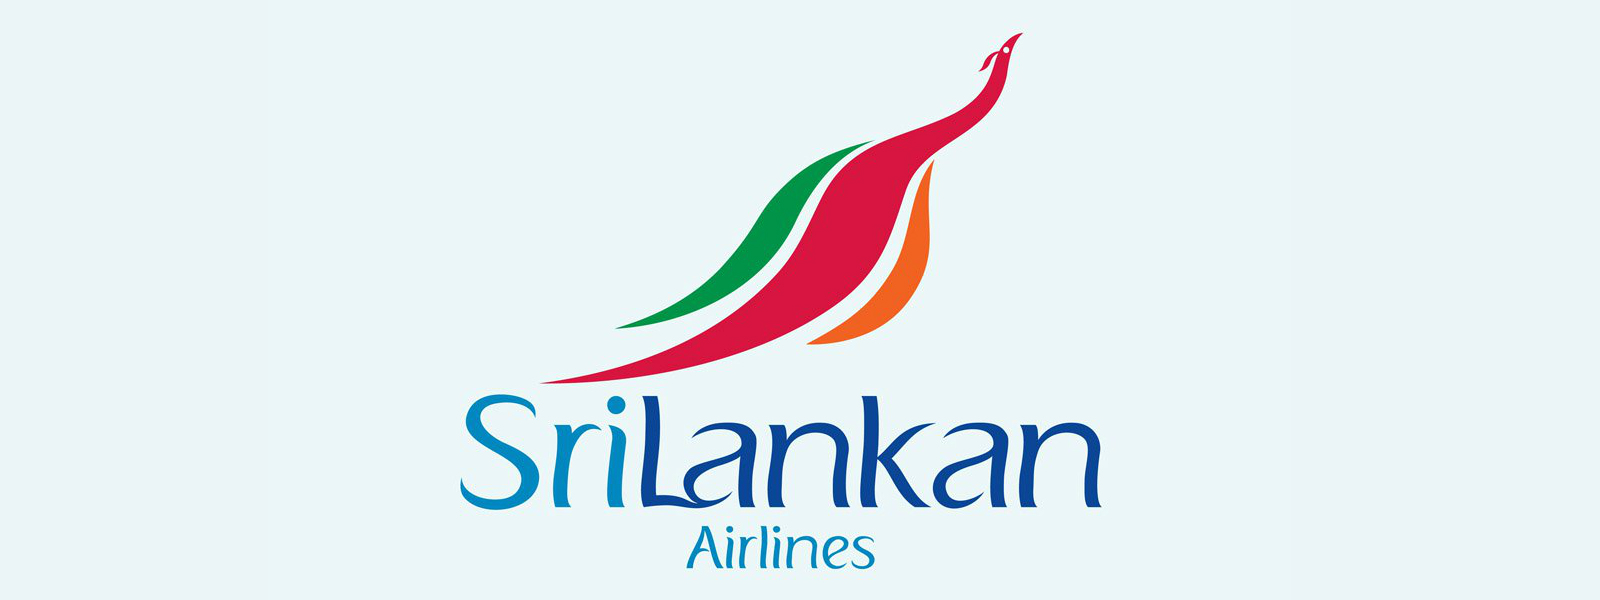 SriLankan to Undergo Restructuring, Not Sale